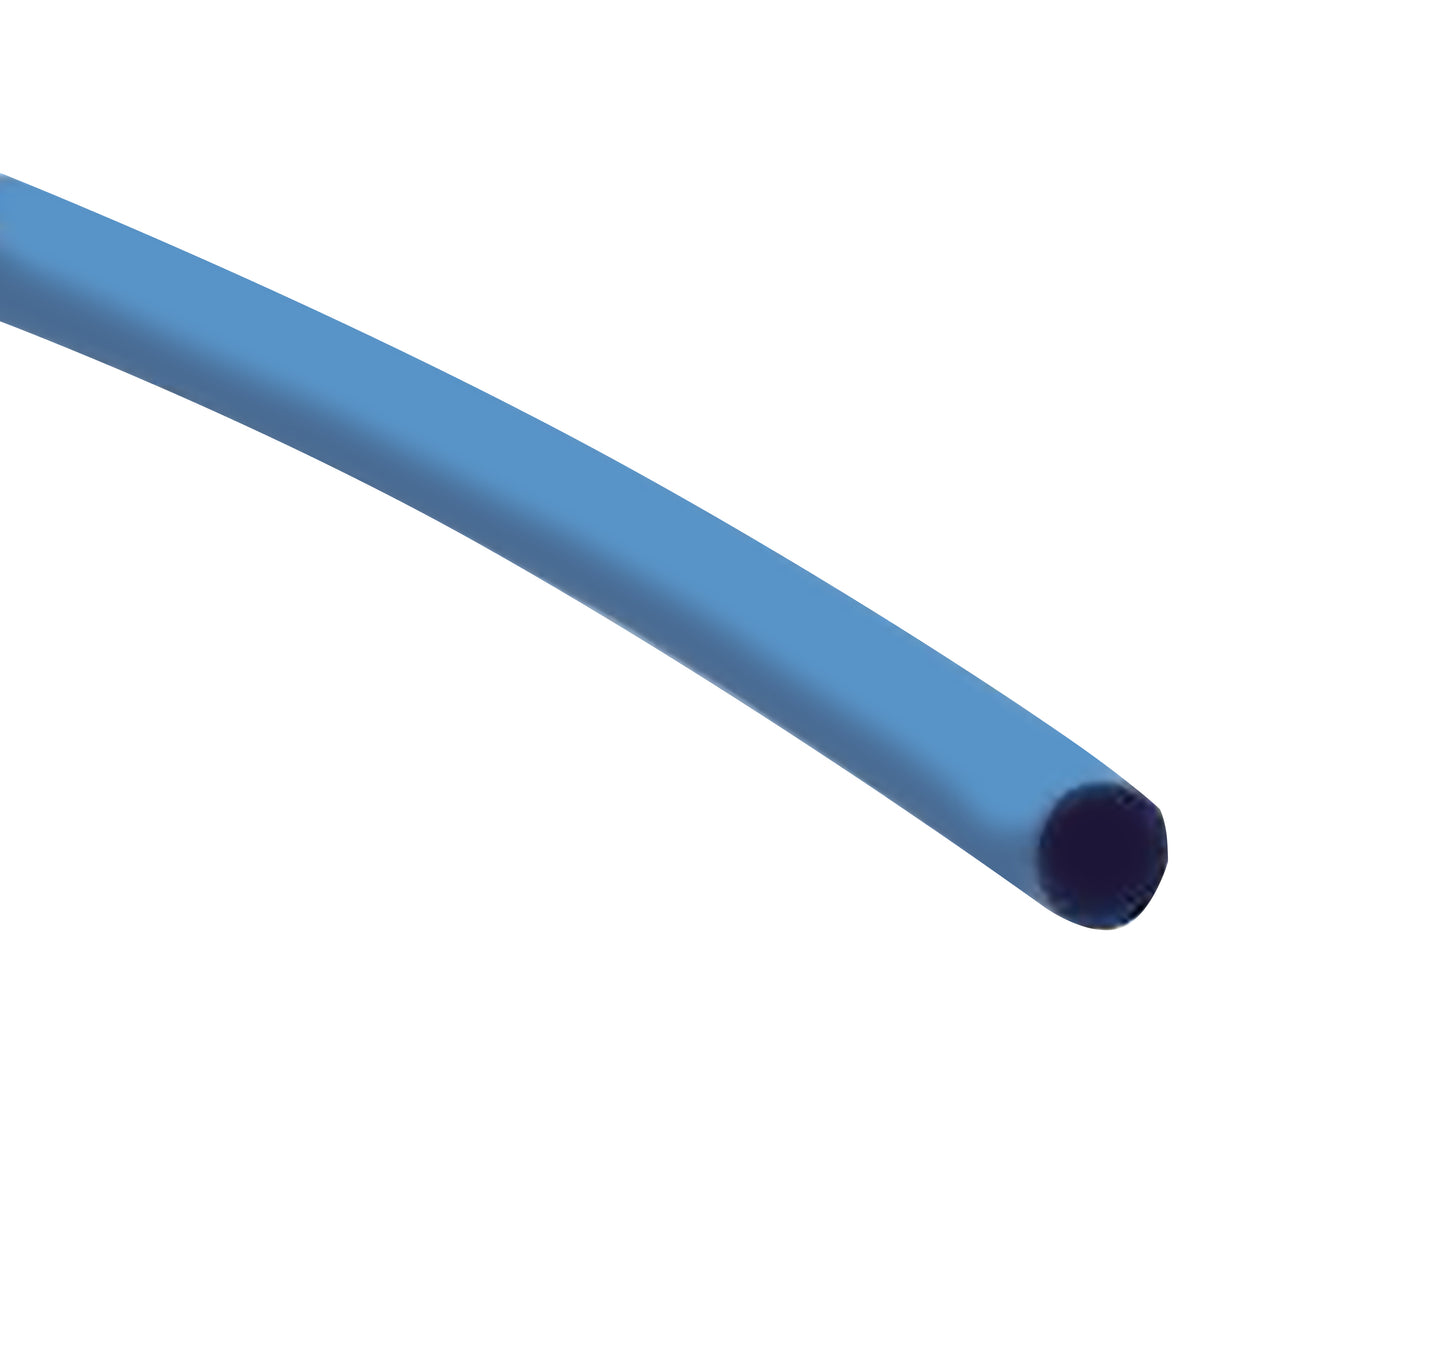 Flexible Thin Single Wall Non-Adhesive Heat Shrink Tubing 2:1 Blue 1/2" ID - 12" Inch 10 Pack